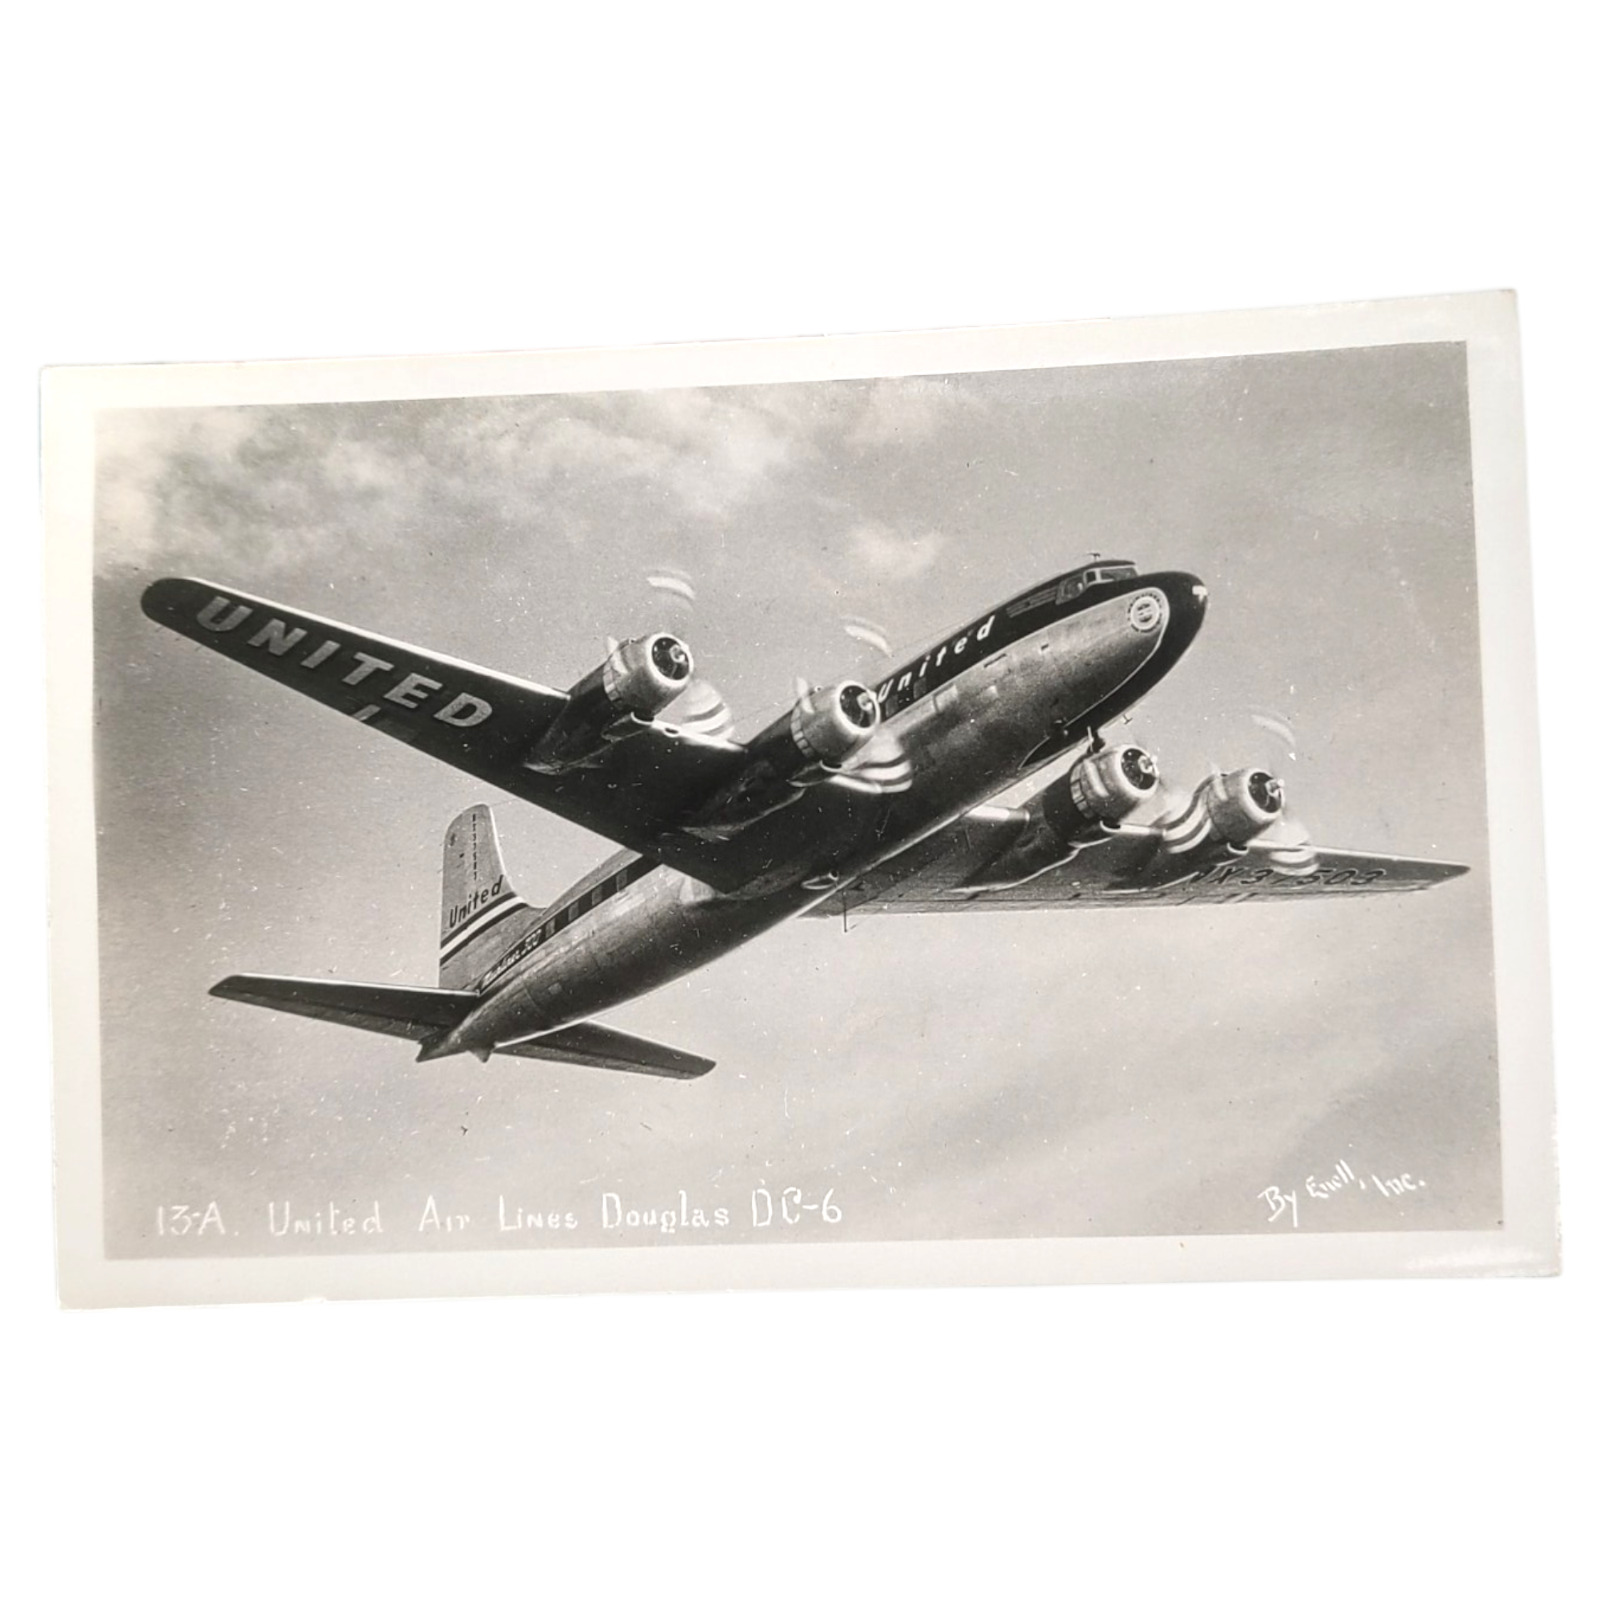 Vintage Douglas DC-6 Airplane United Air Lines RPPC 1950s Postcard by Enell Inc